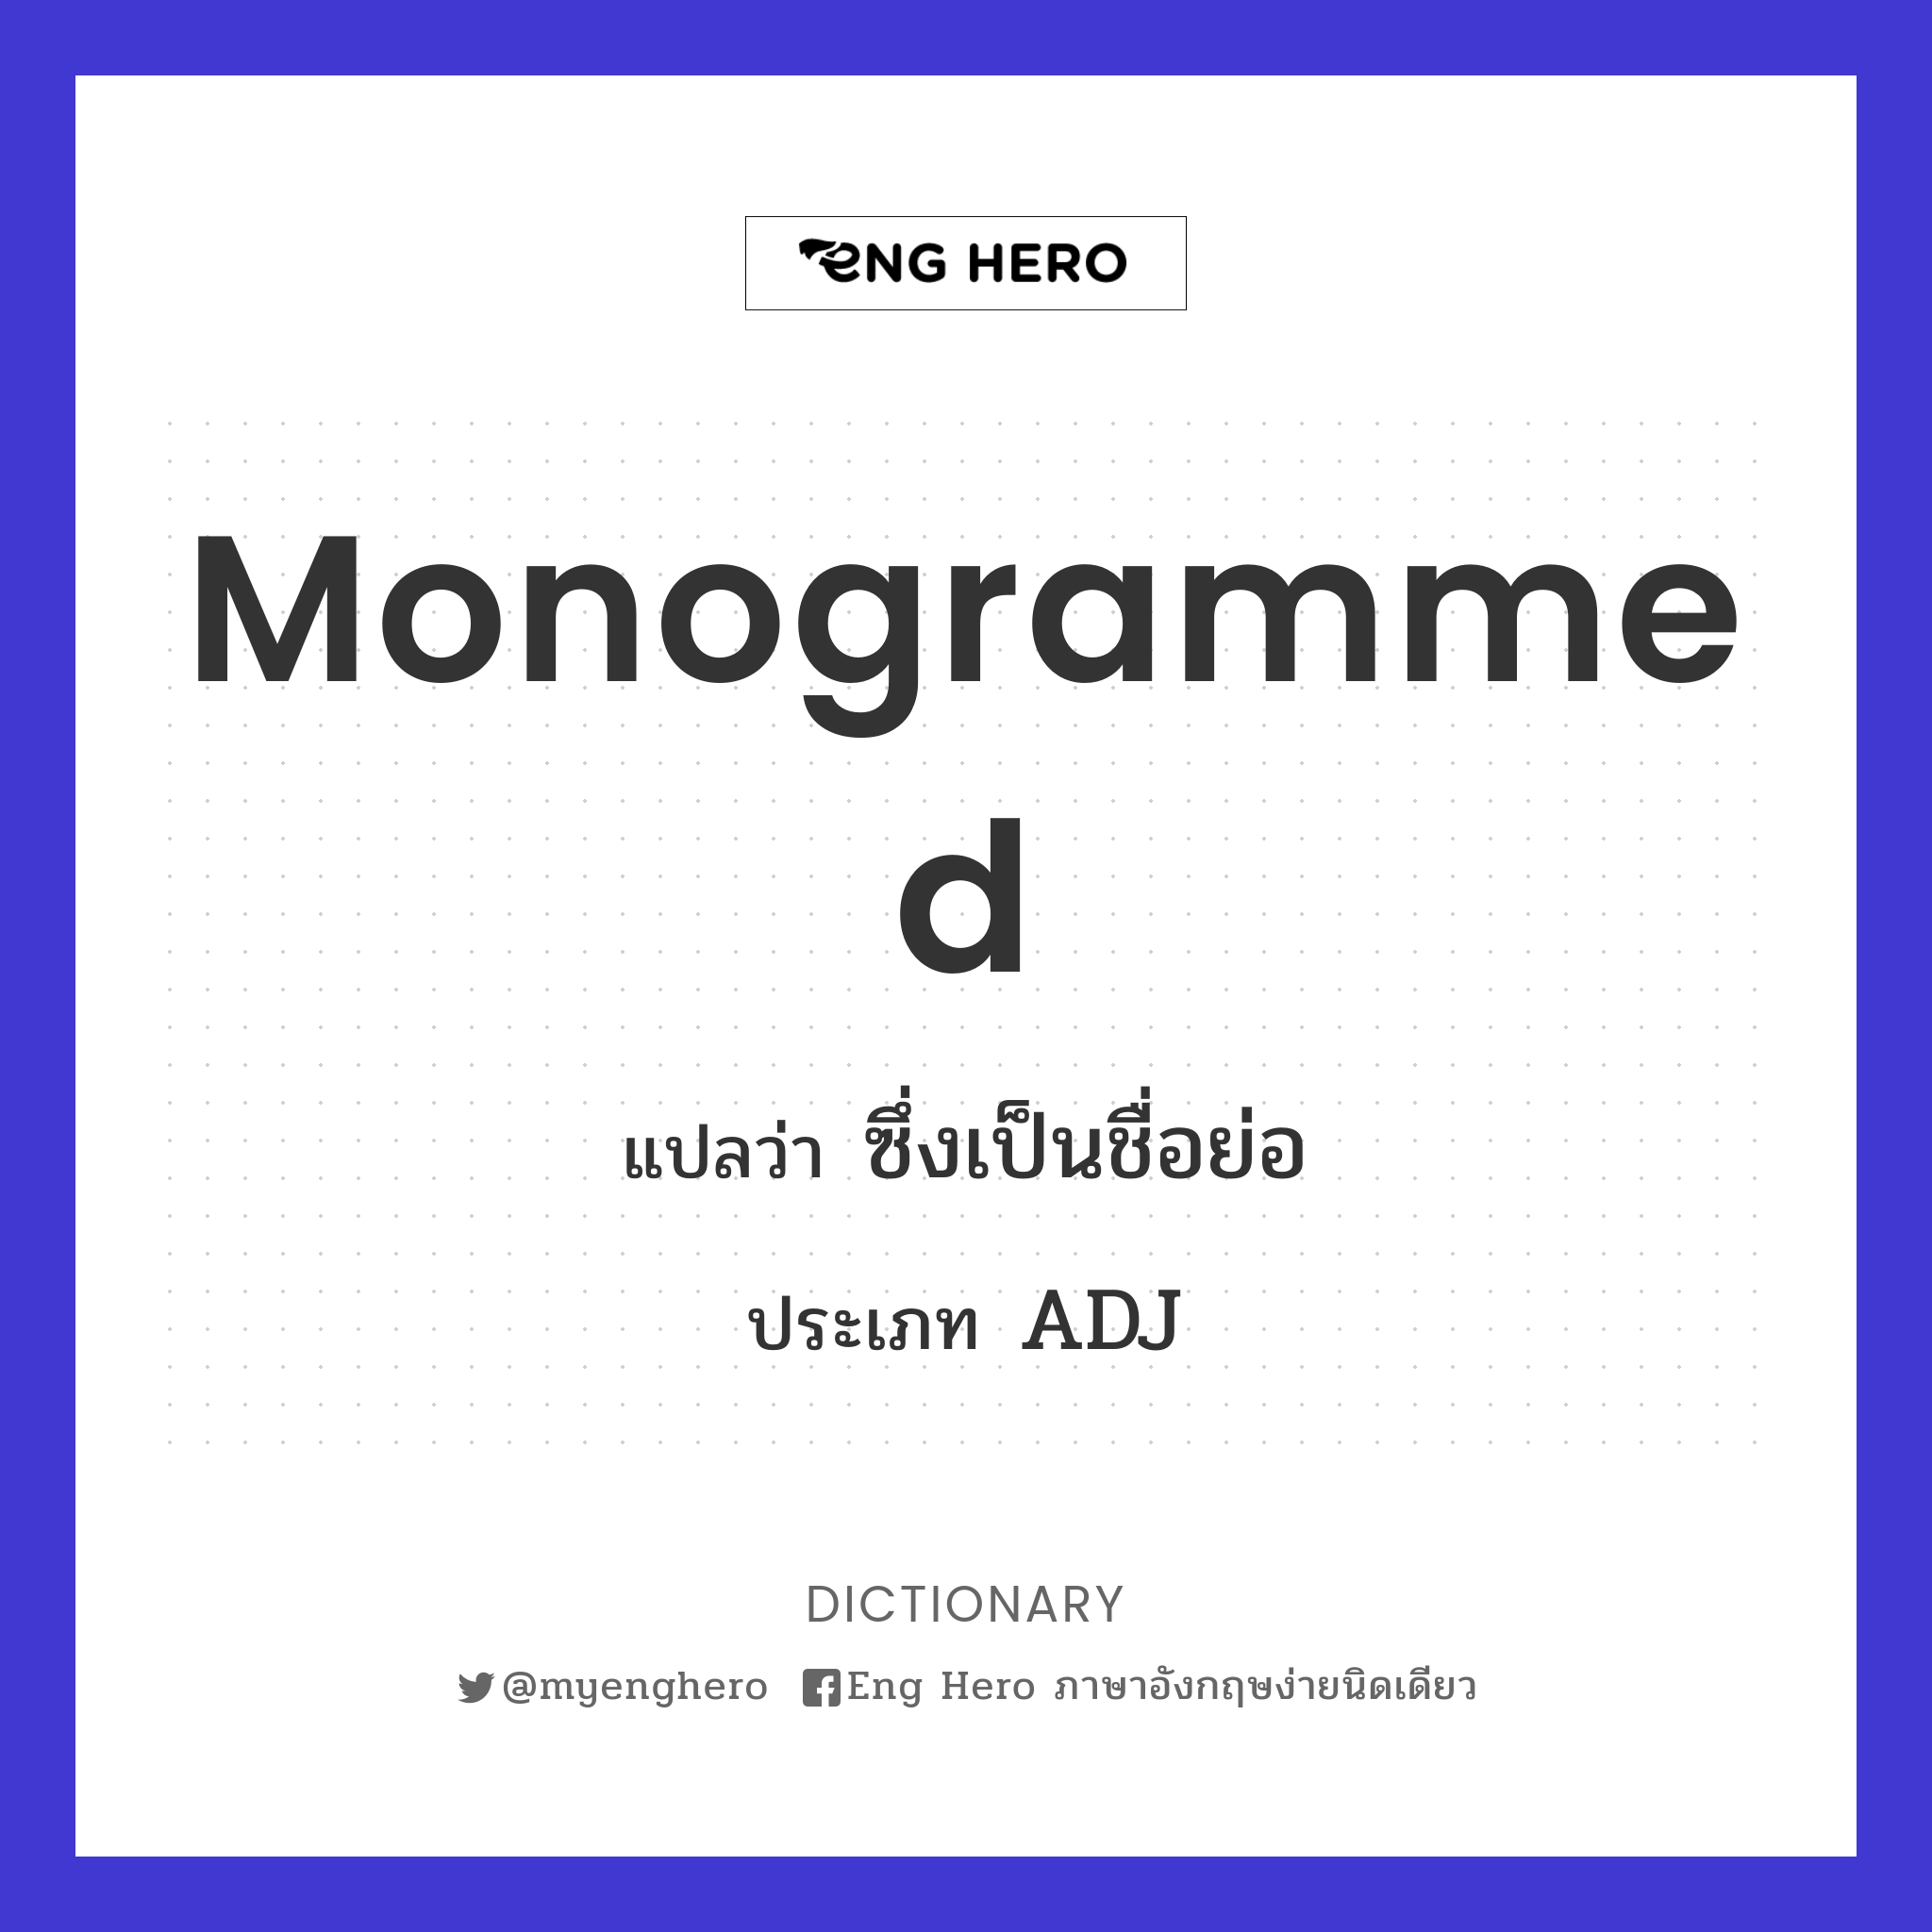 monogrammed